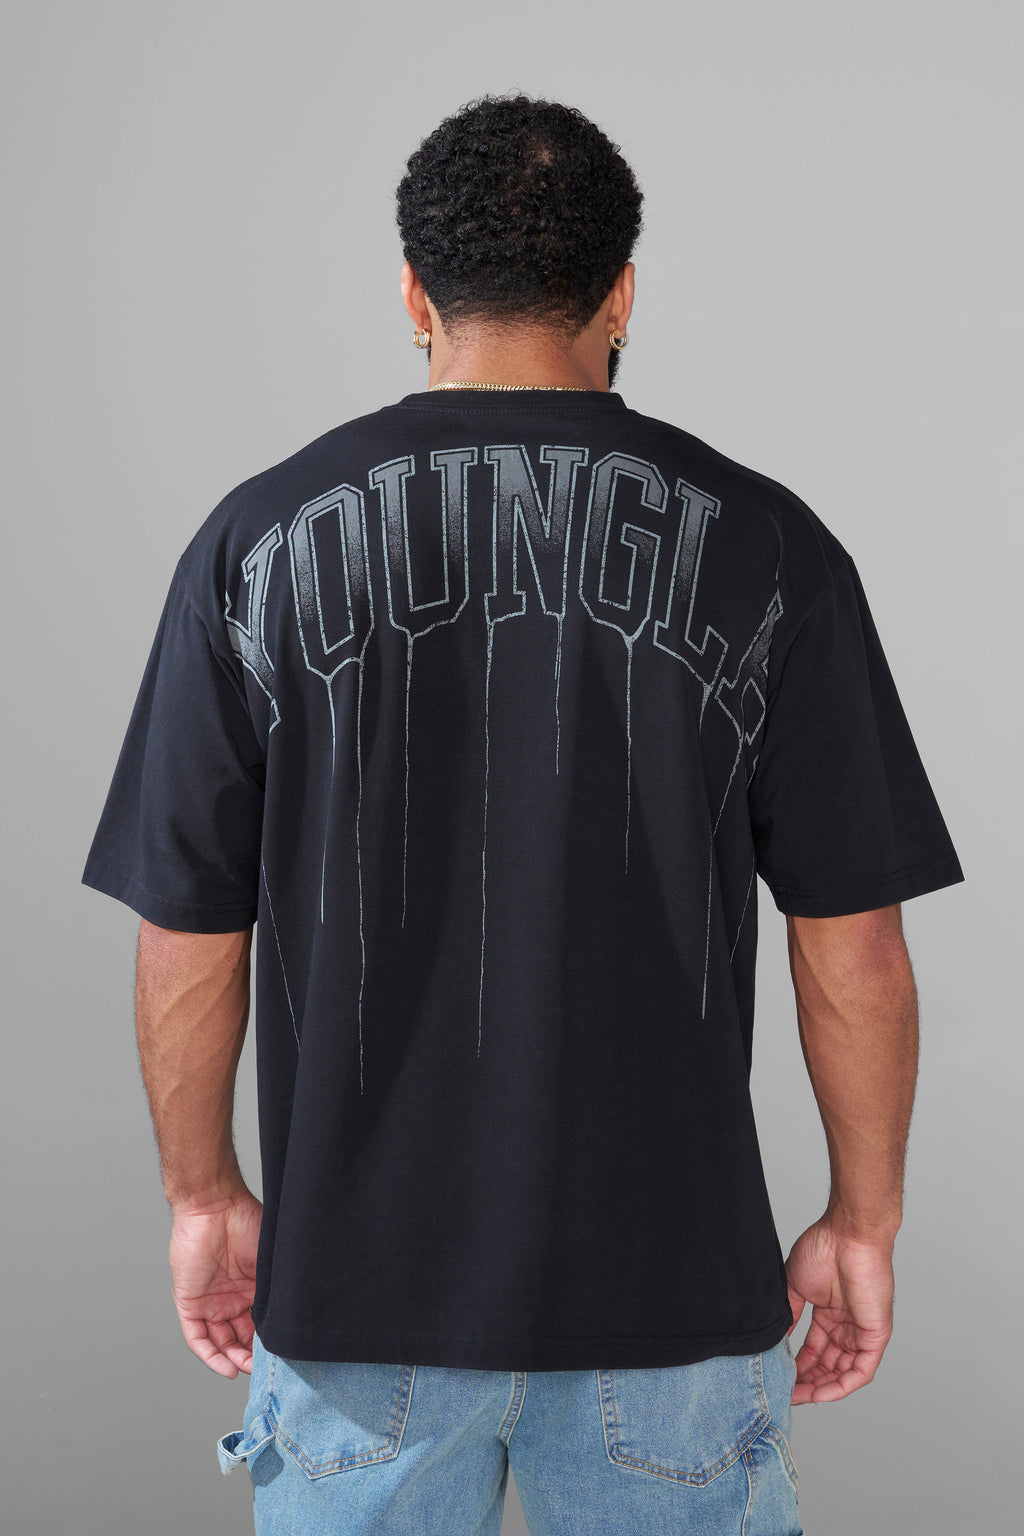 YoungLA black oversized shirt size XXL